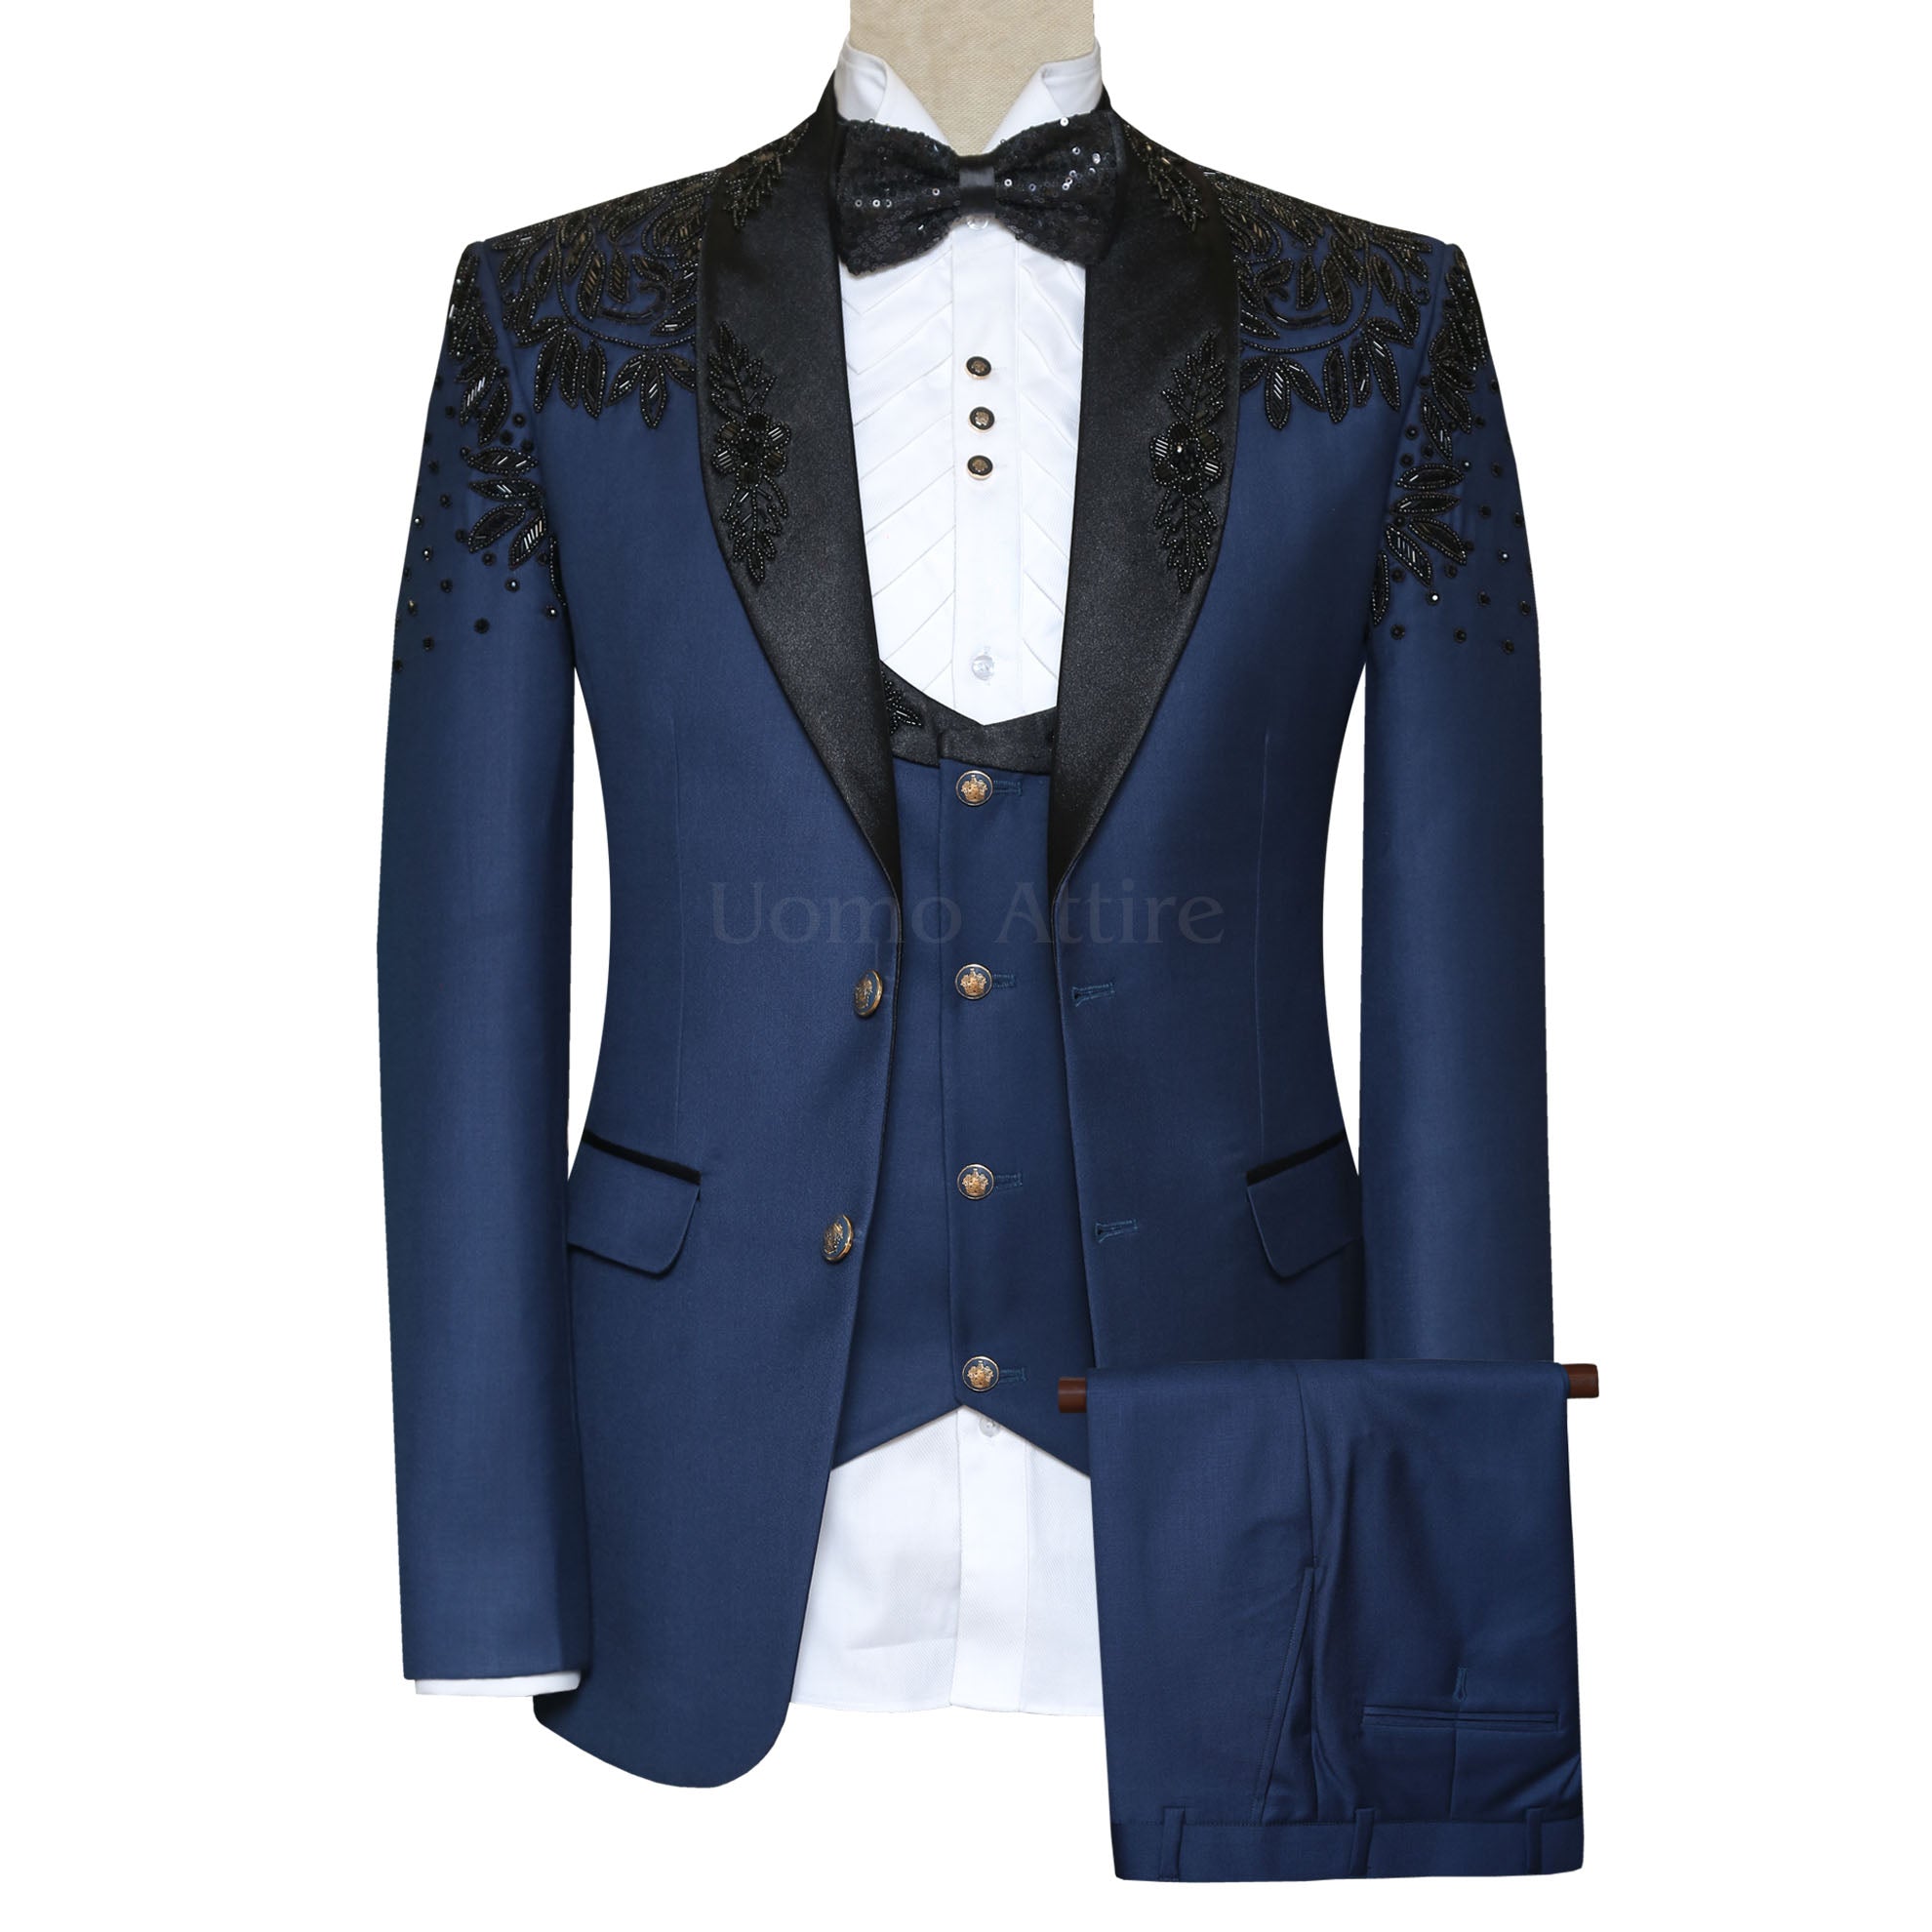 Handmade navy blue groom tuxedo with black shawl lapel